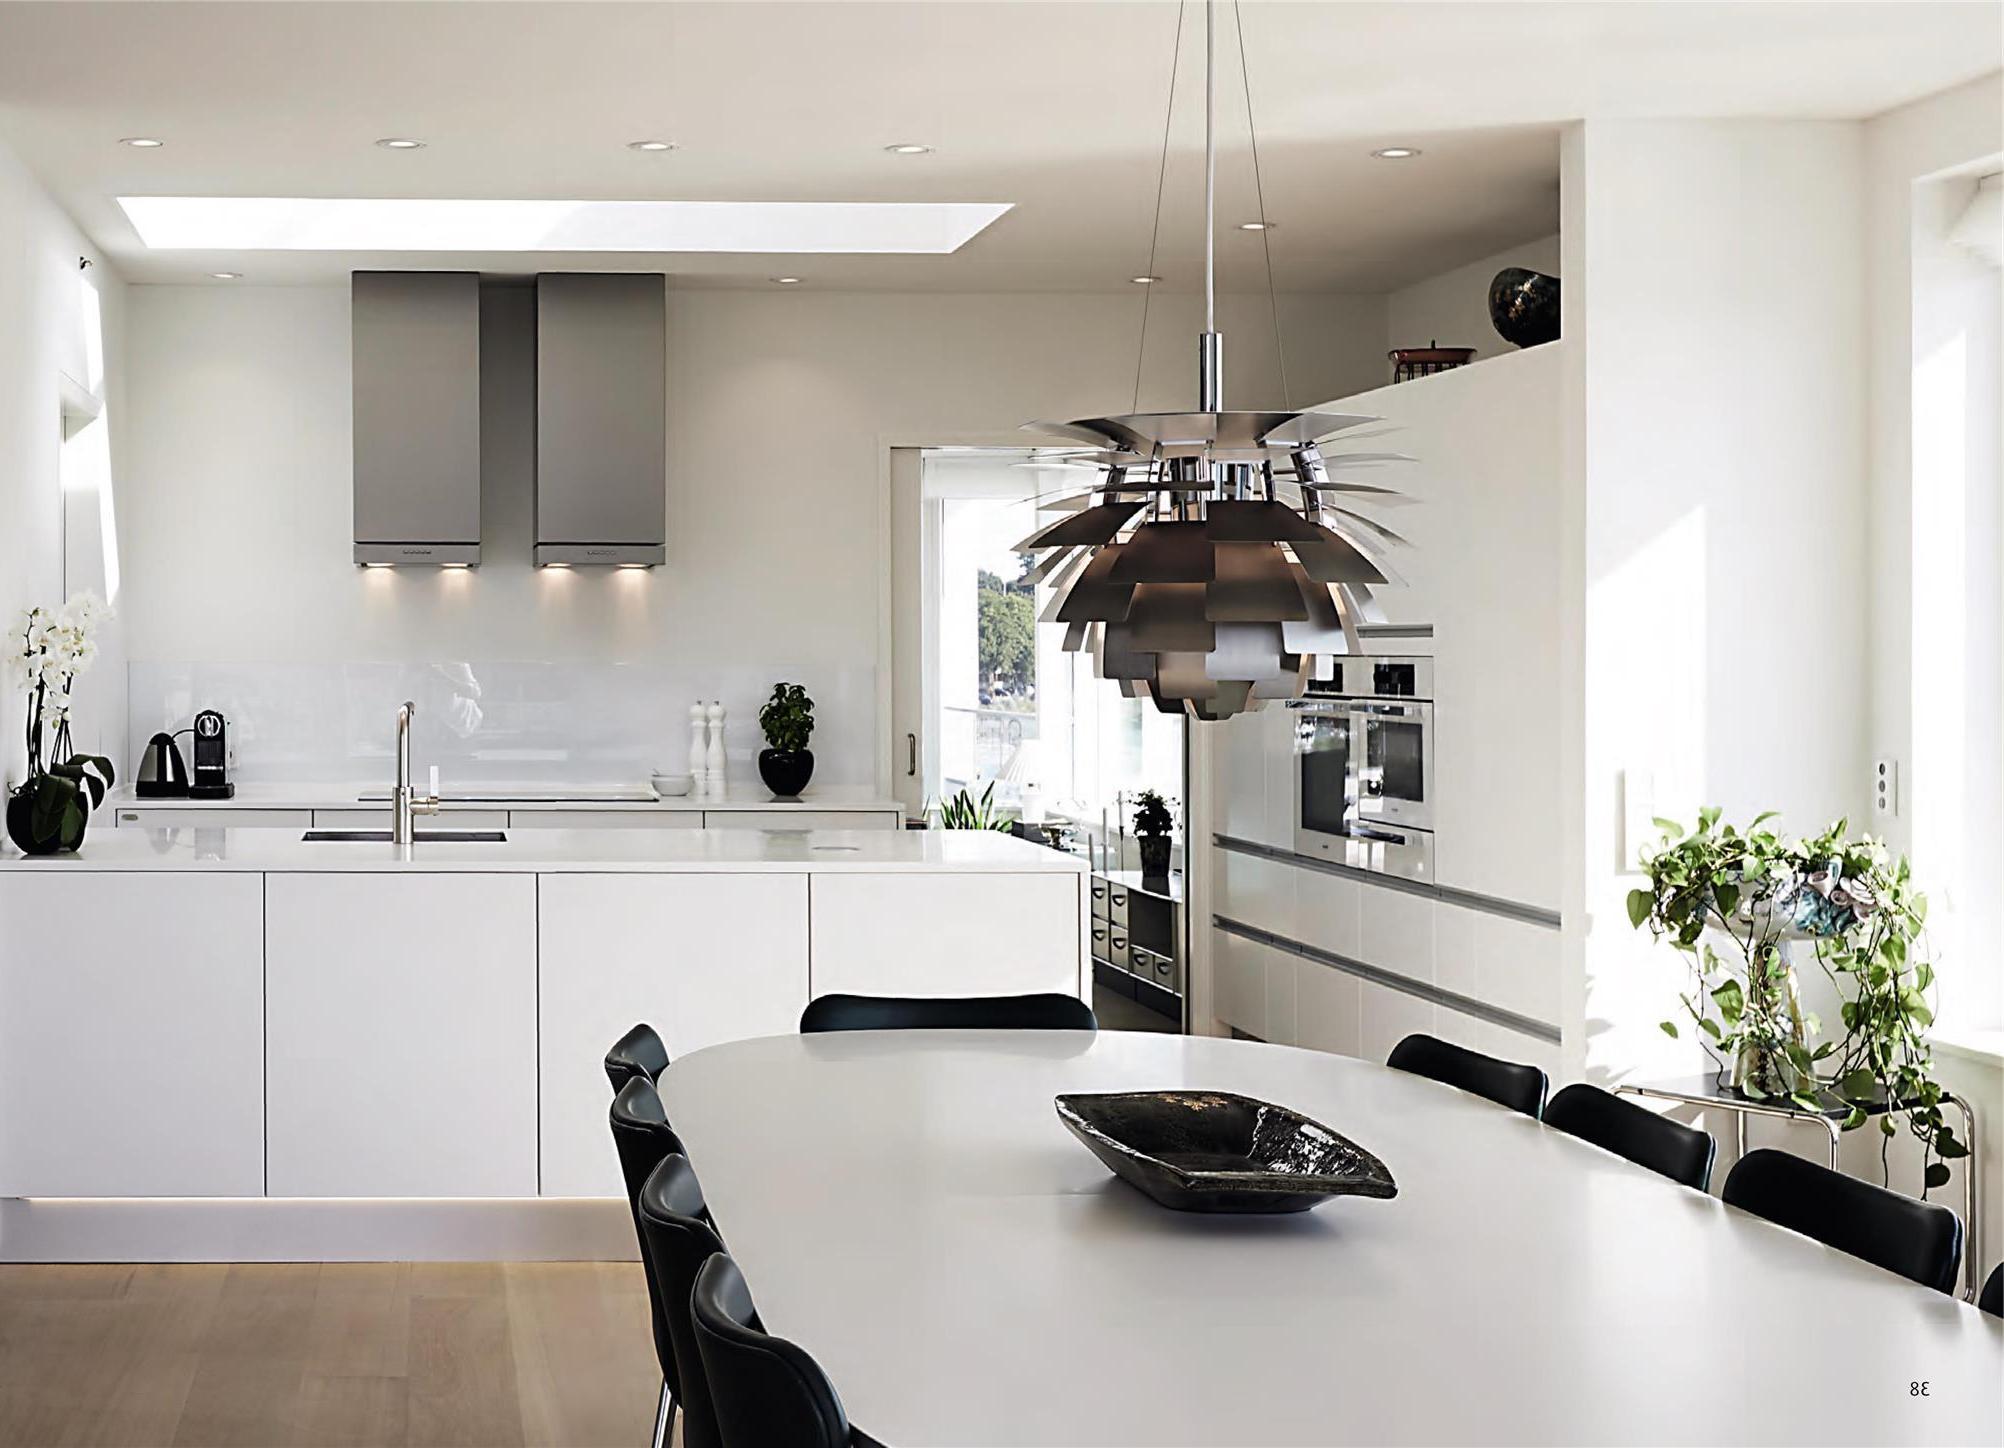 Kitchen Lighting Ideas: 45 Lights Designs To Set The Scene